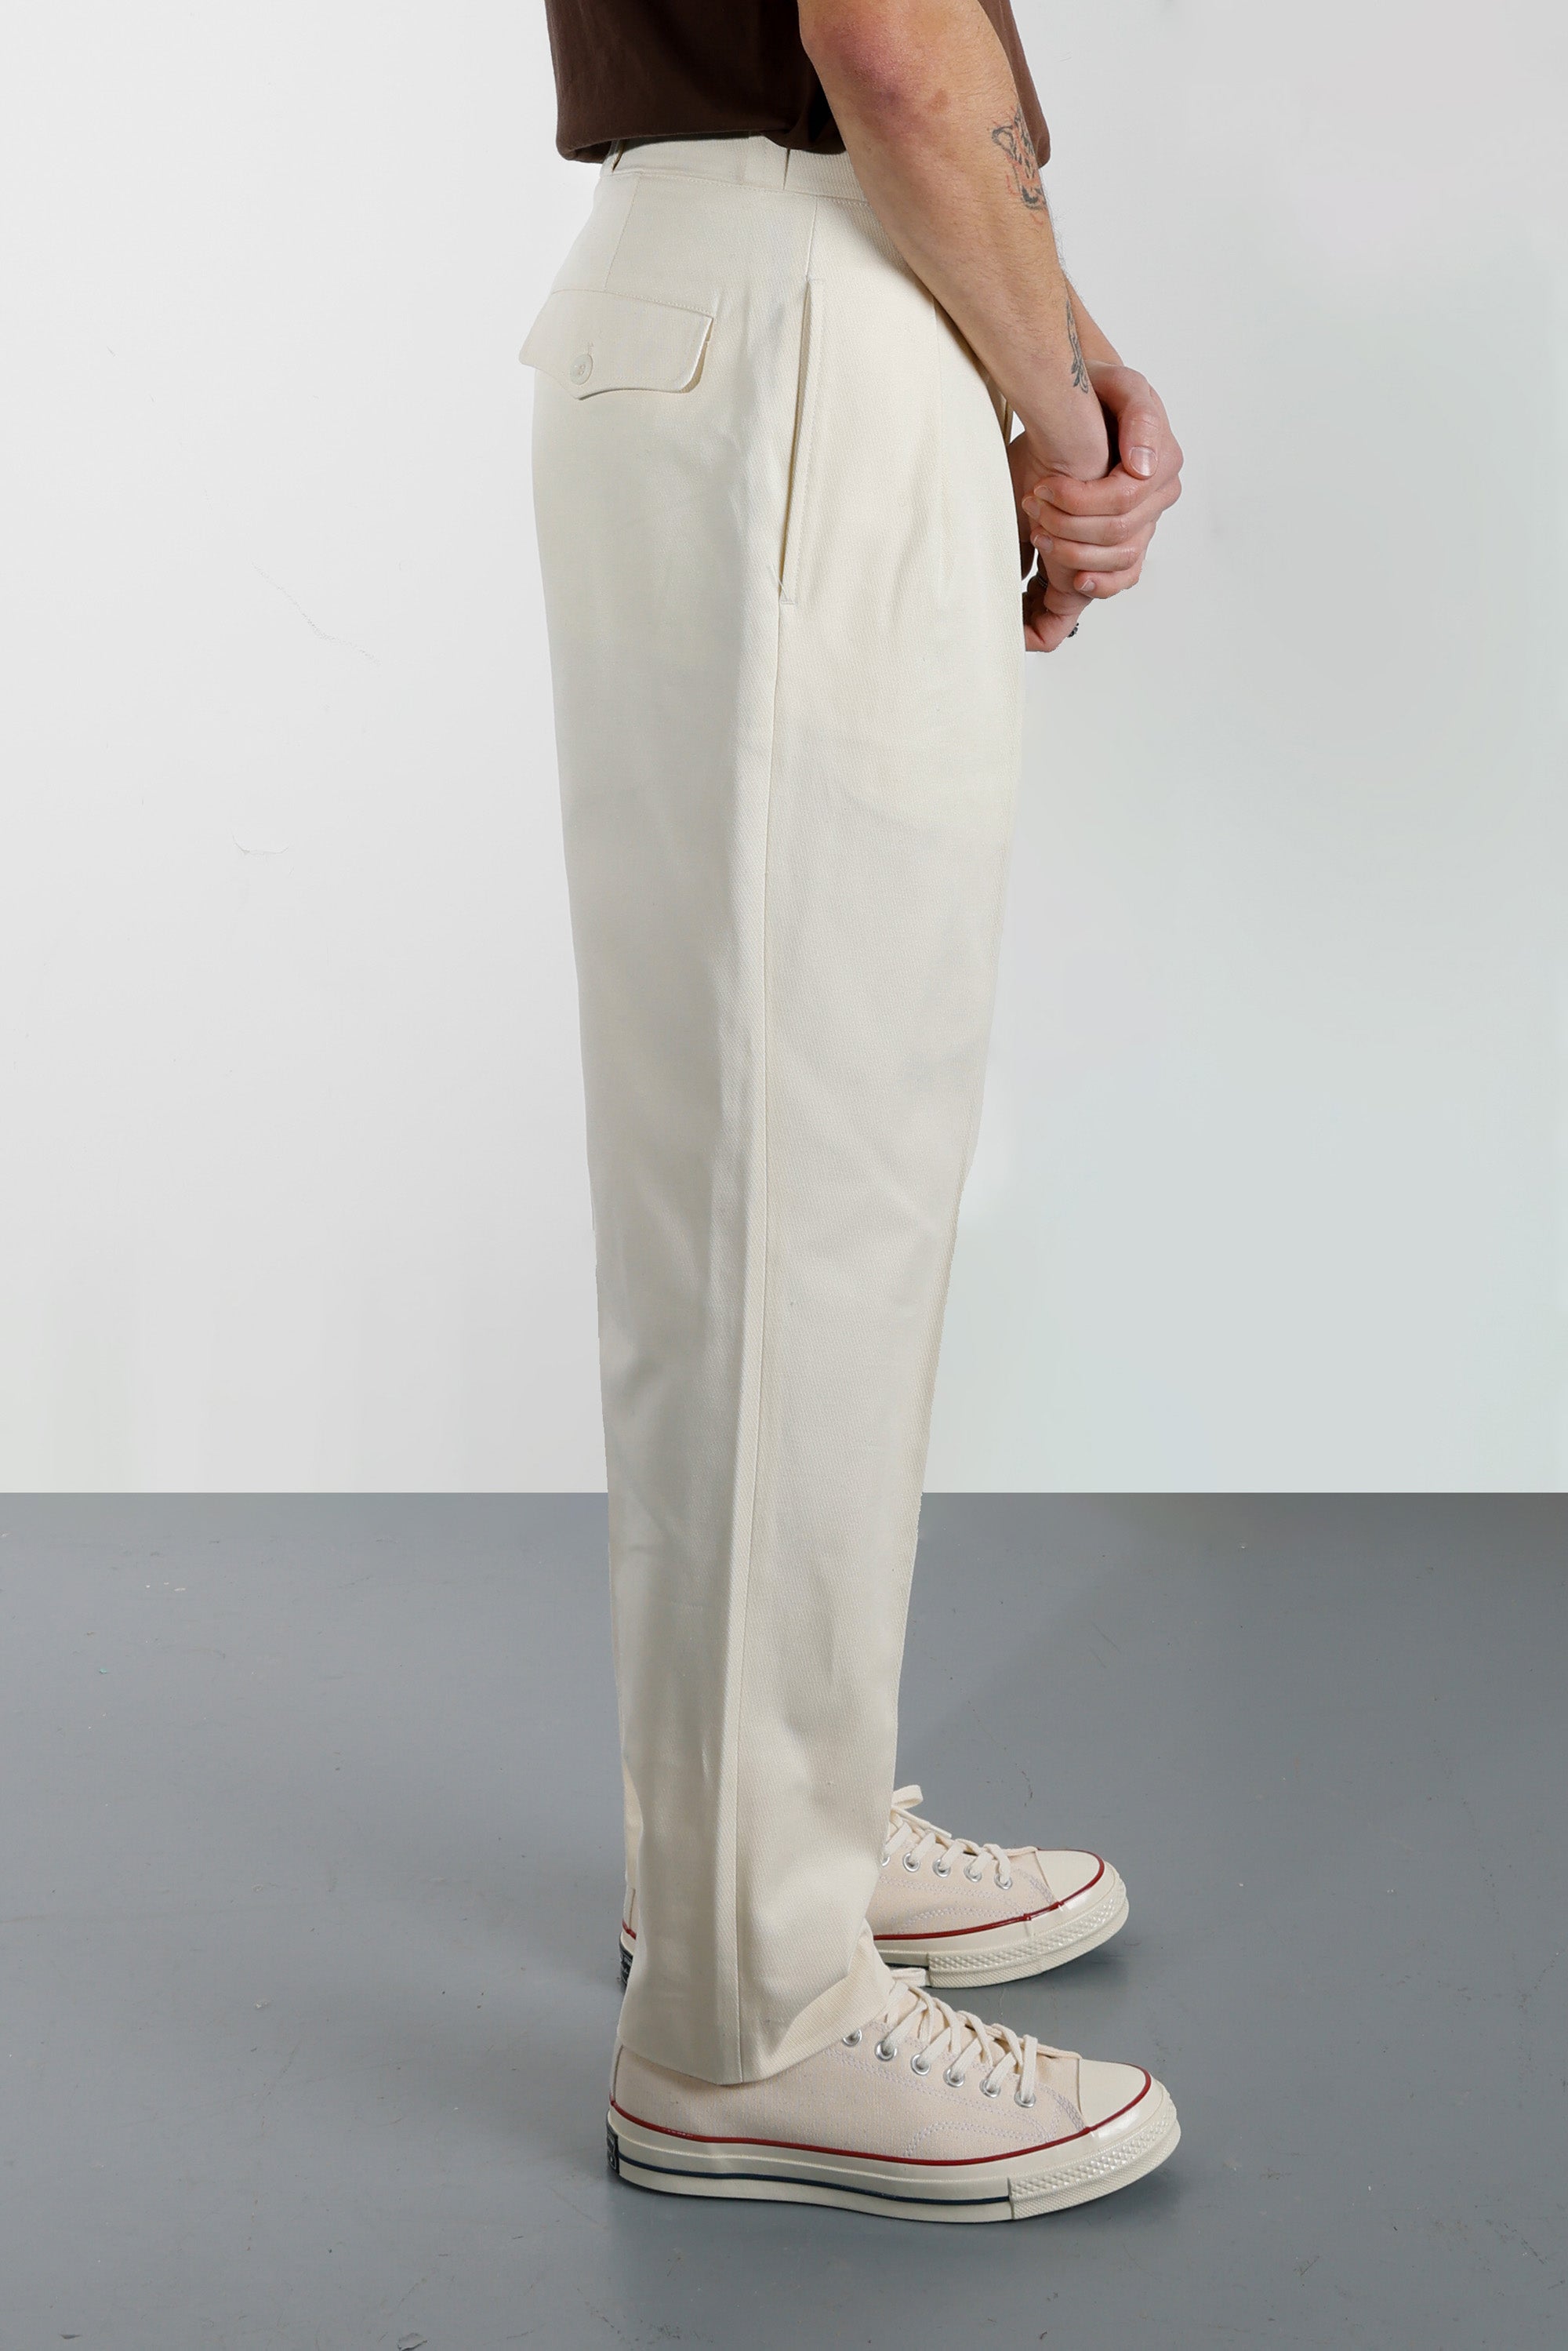 Mens Cargo Pants Multi Pocket Trousers Casual Military Cotton Pants Plus  Size ❤ | eBay